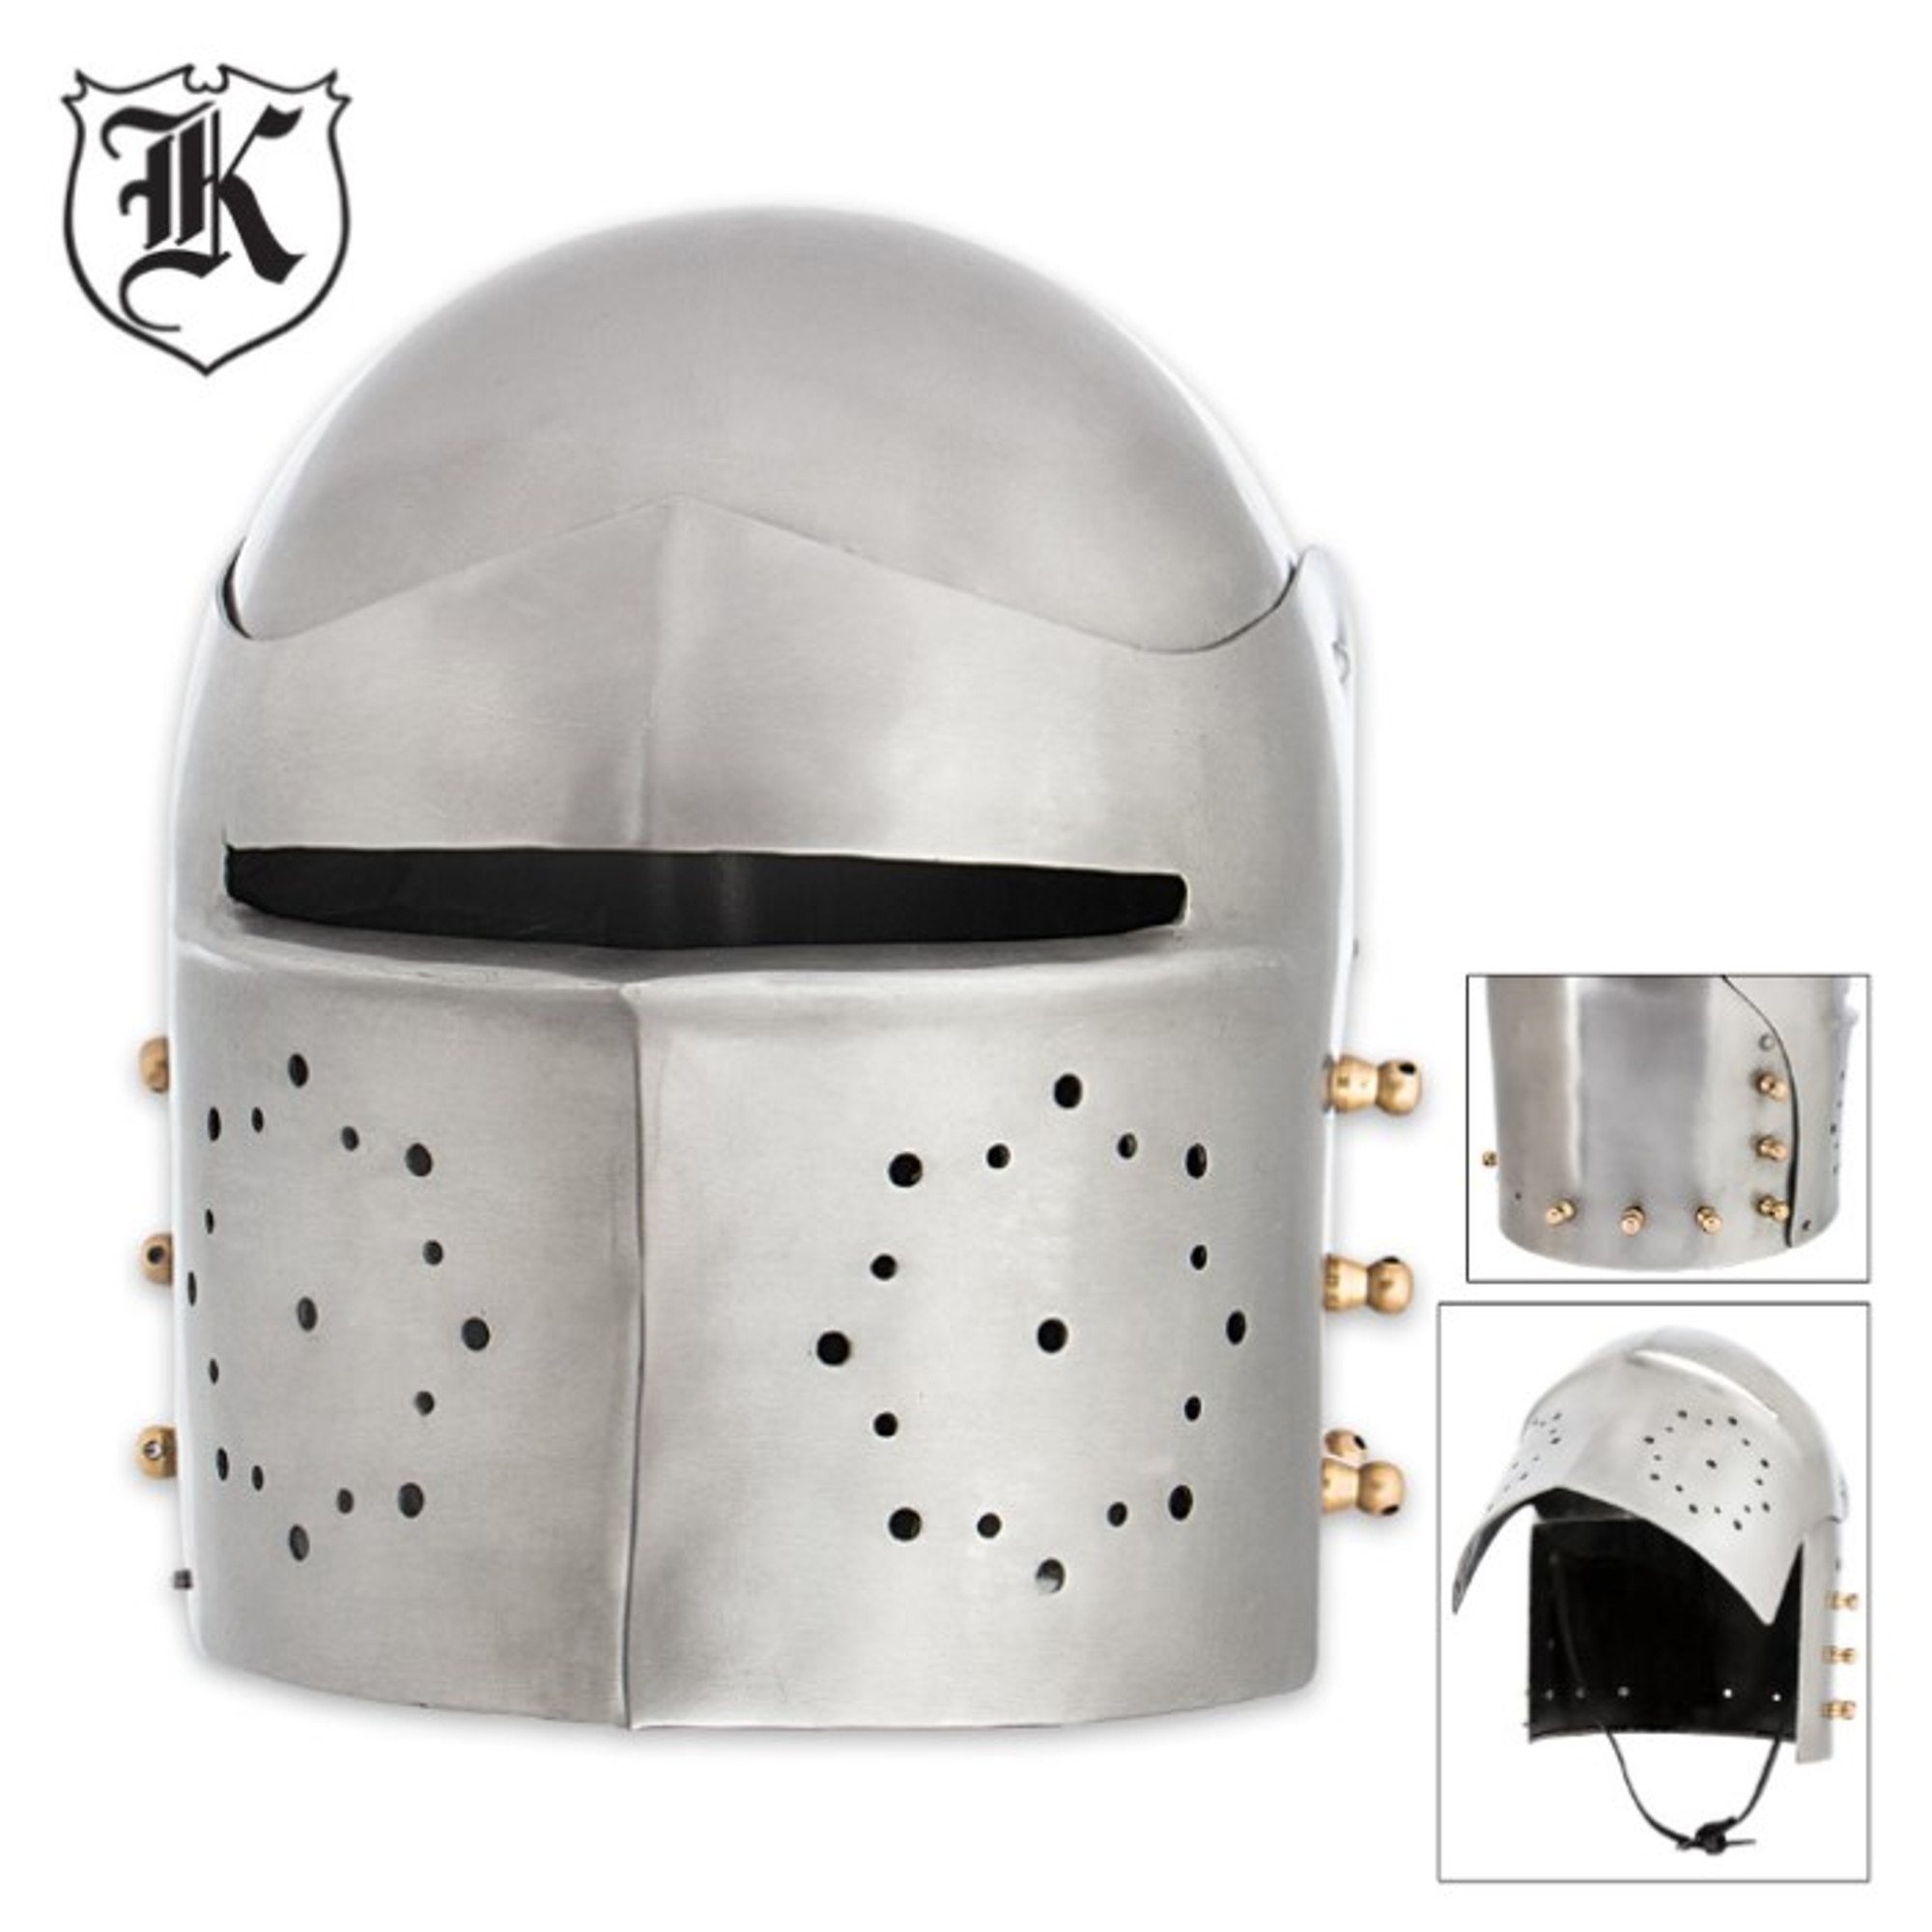 Legends In Steel Crusader Knight Helm